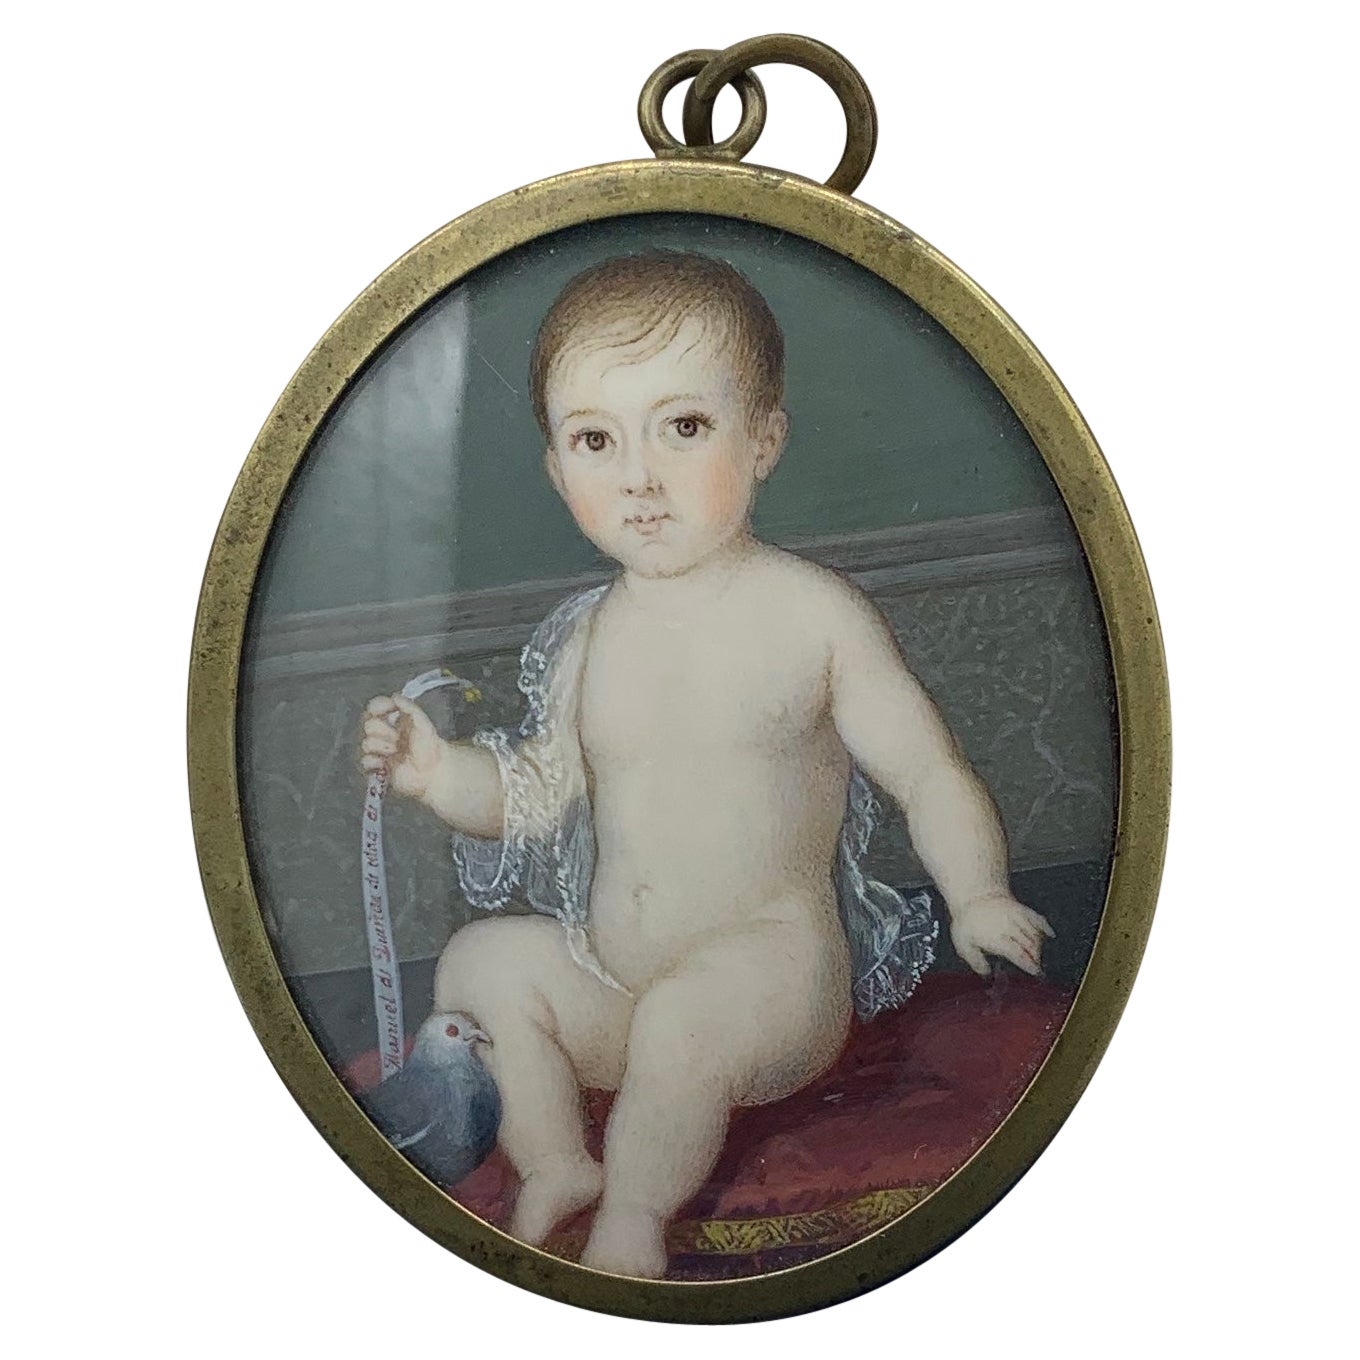 Georgian Child Dove Bird Locket Pendant Portrait Miniature Necklace Hand Painted